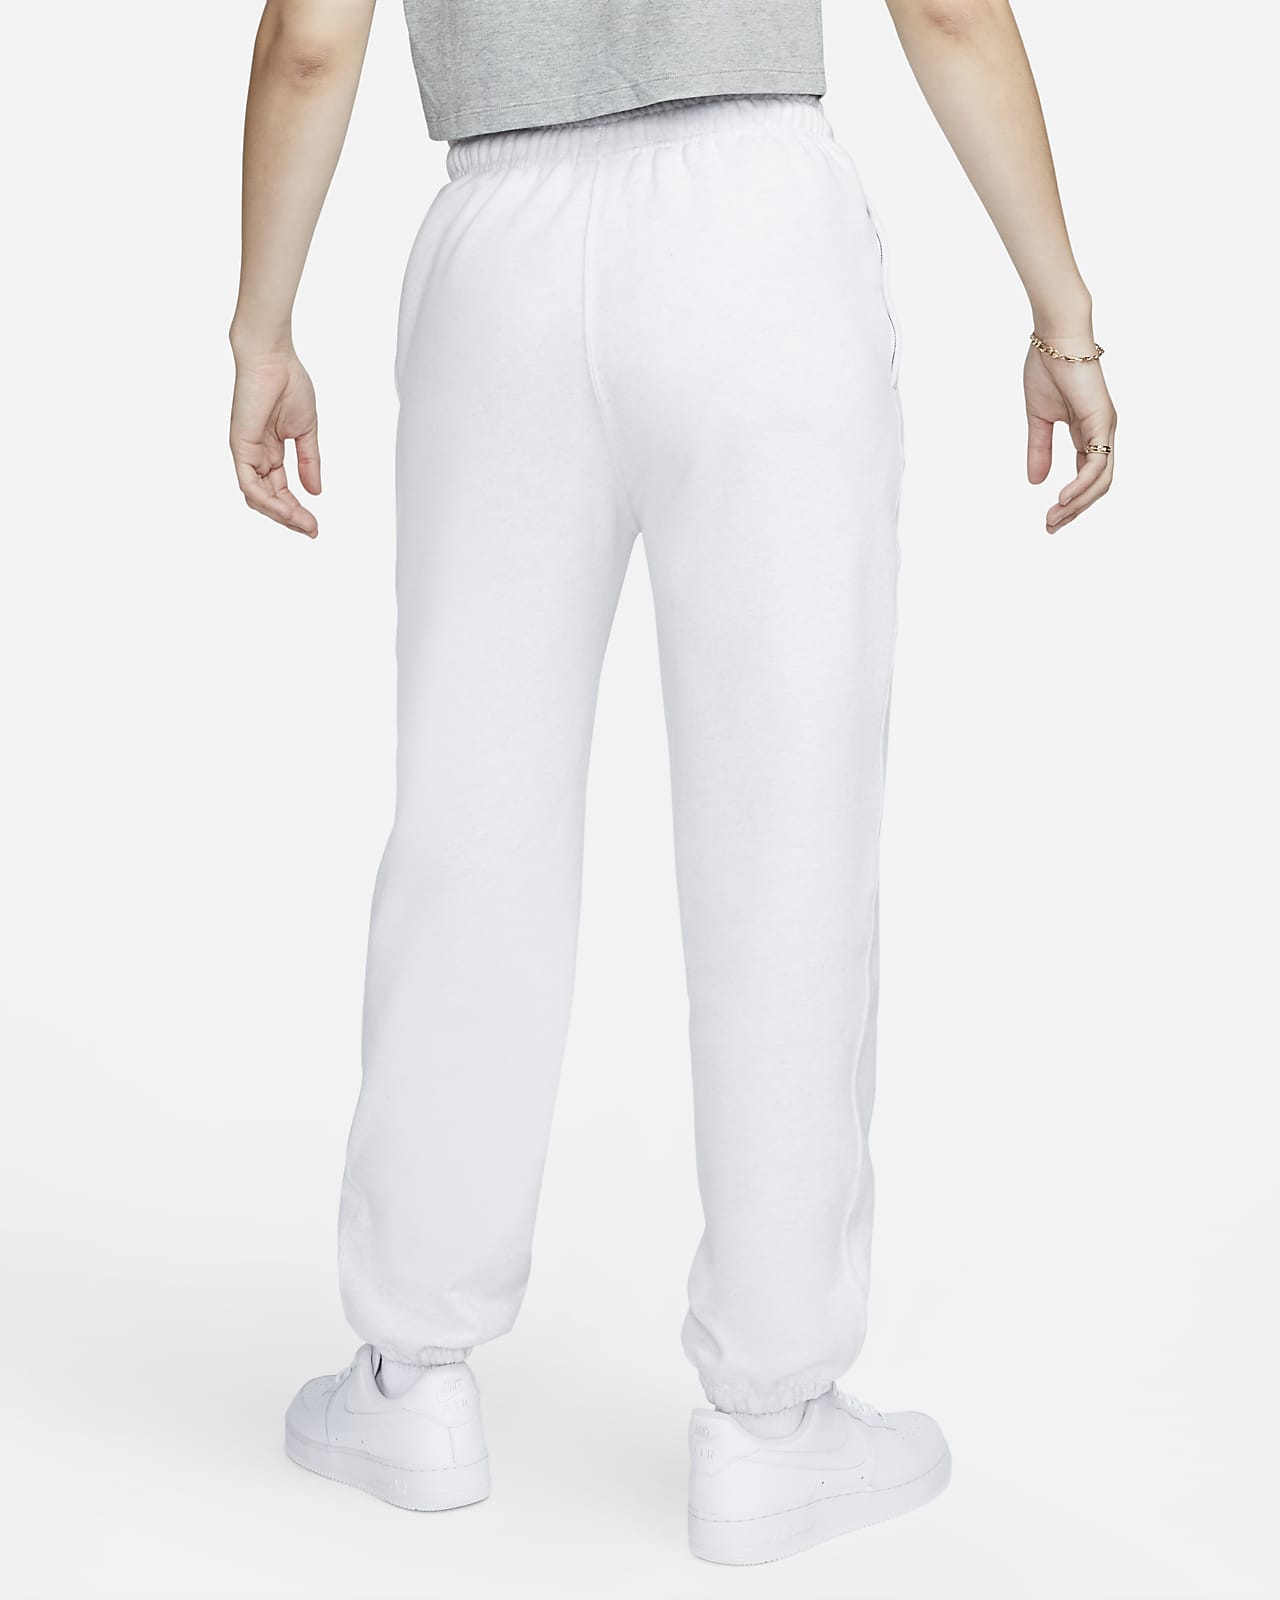 Solo Women's Fleece Pants. Nike.com